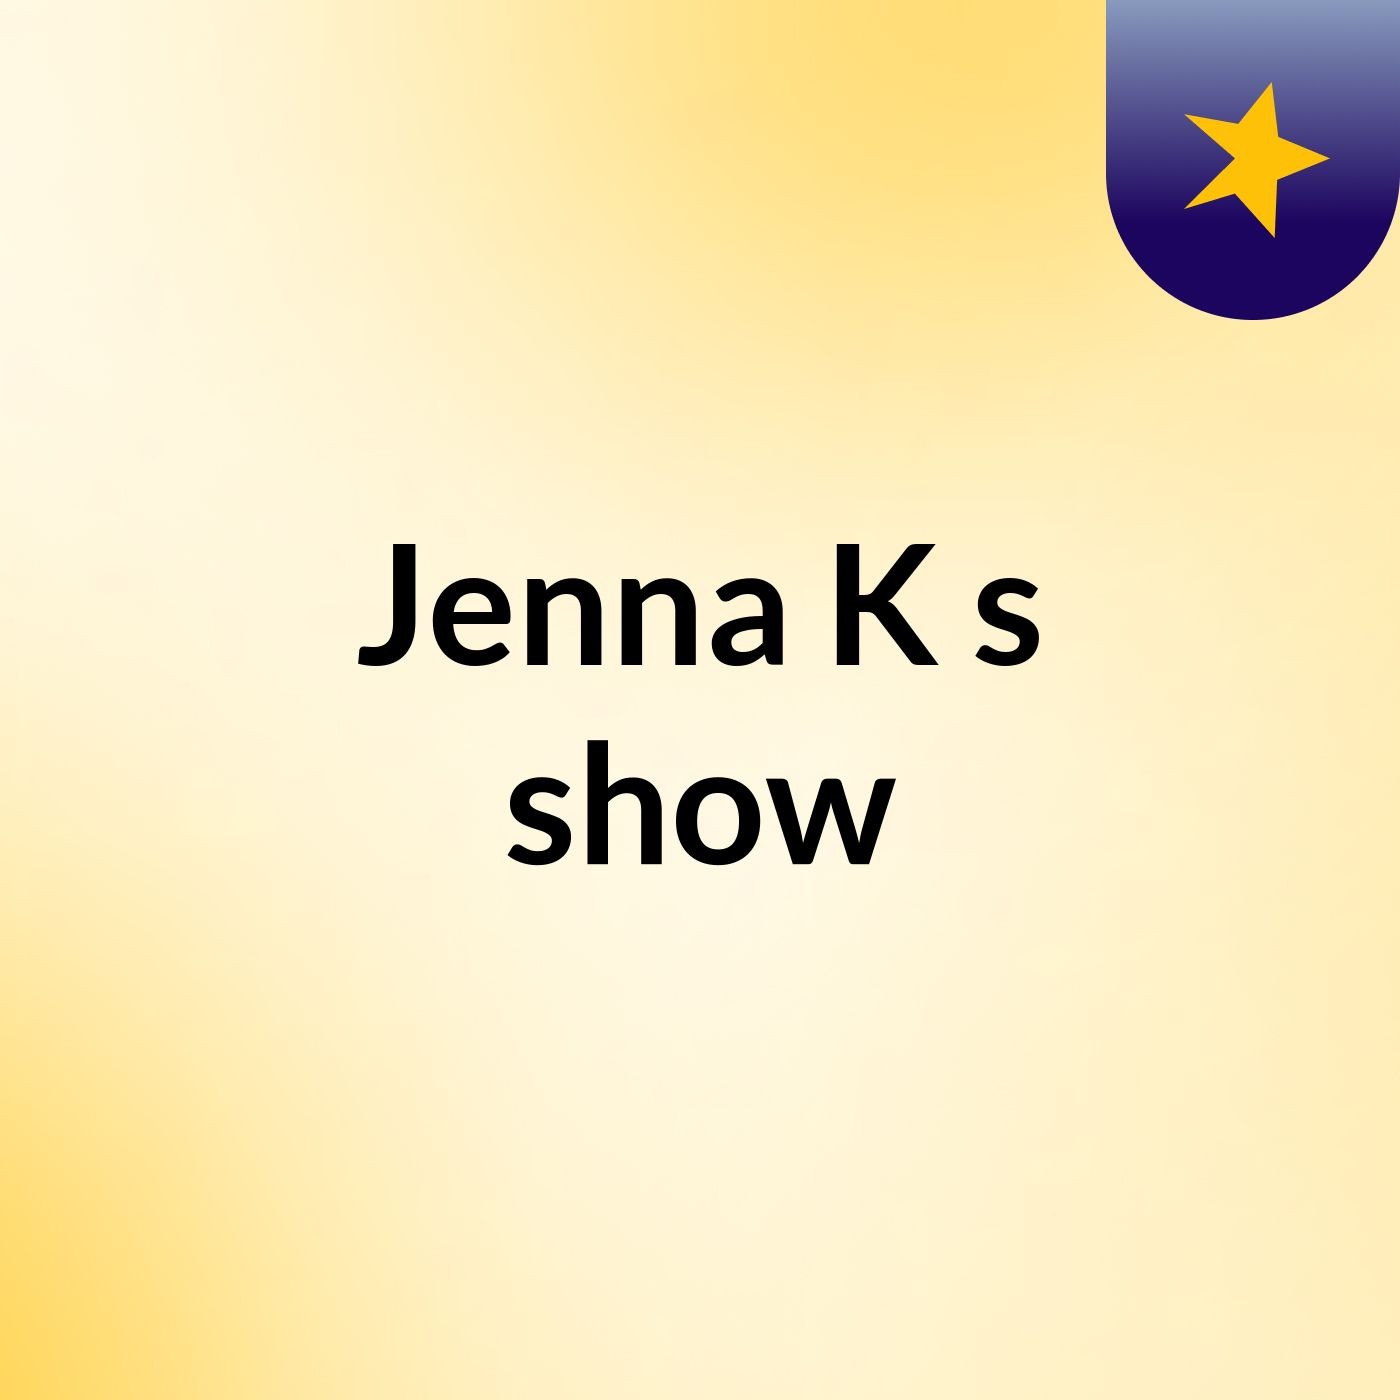 Jenna K's show